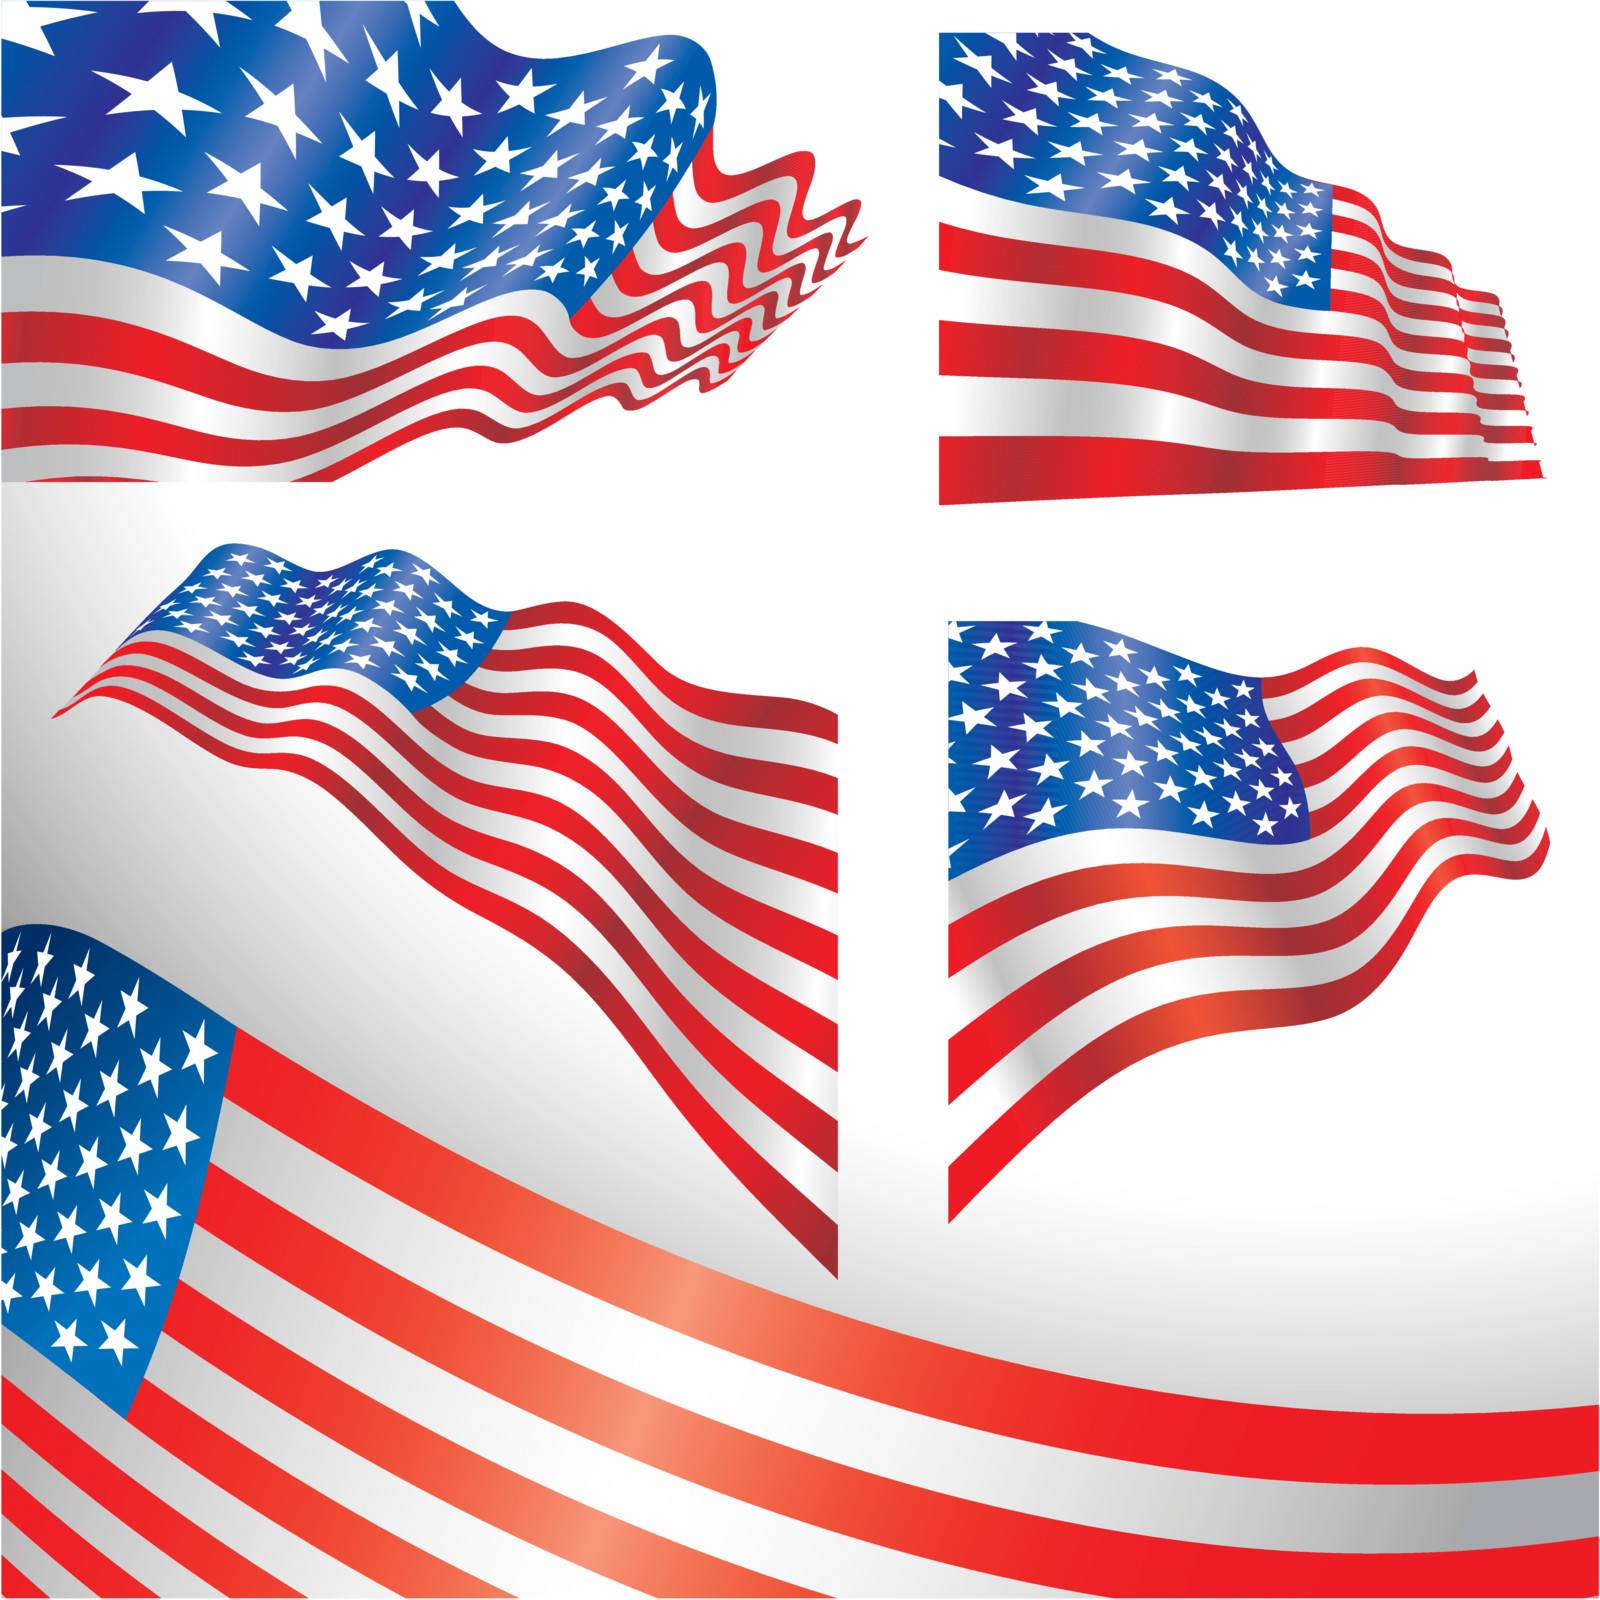 USA windy flags by bonathos